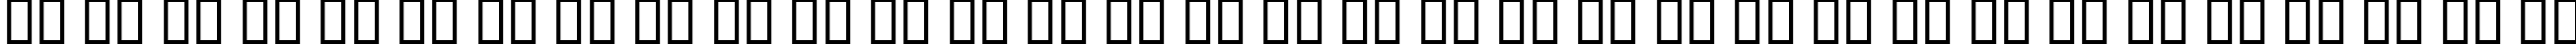 Пример написания русского алфавита шрифтом B Titr Bold